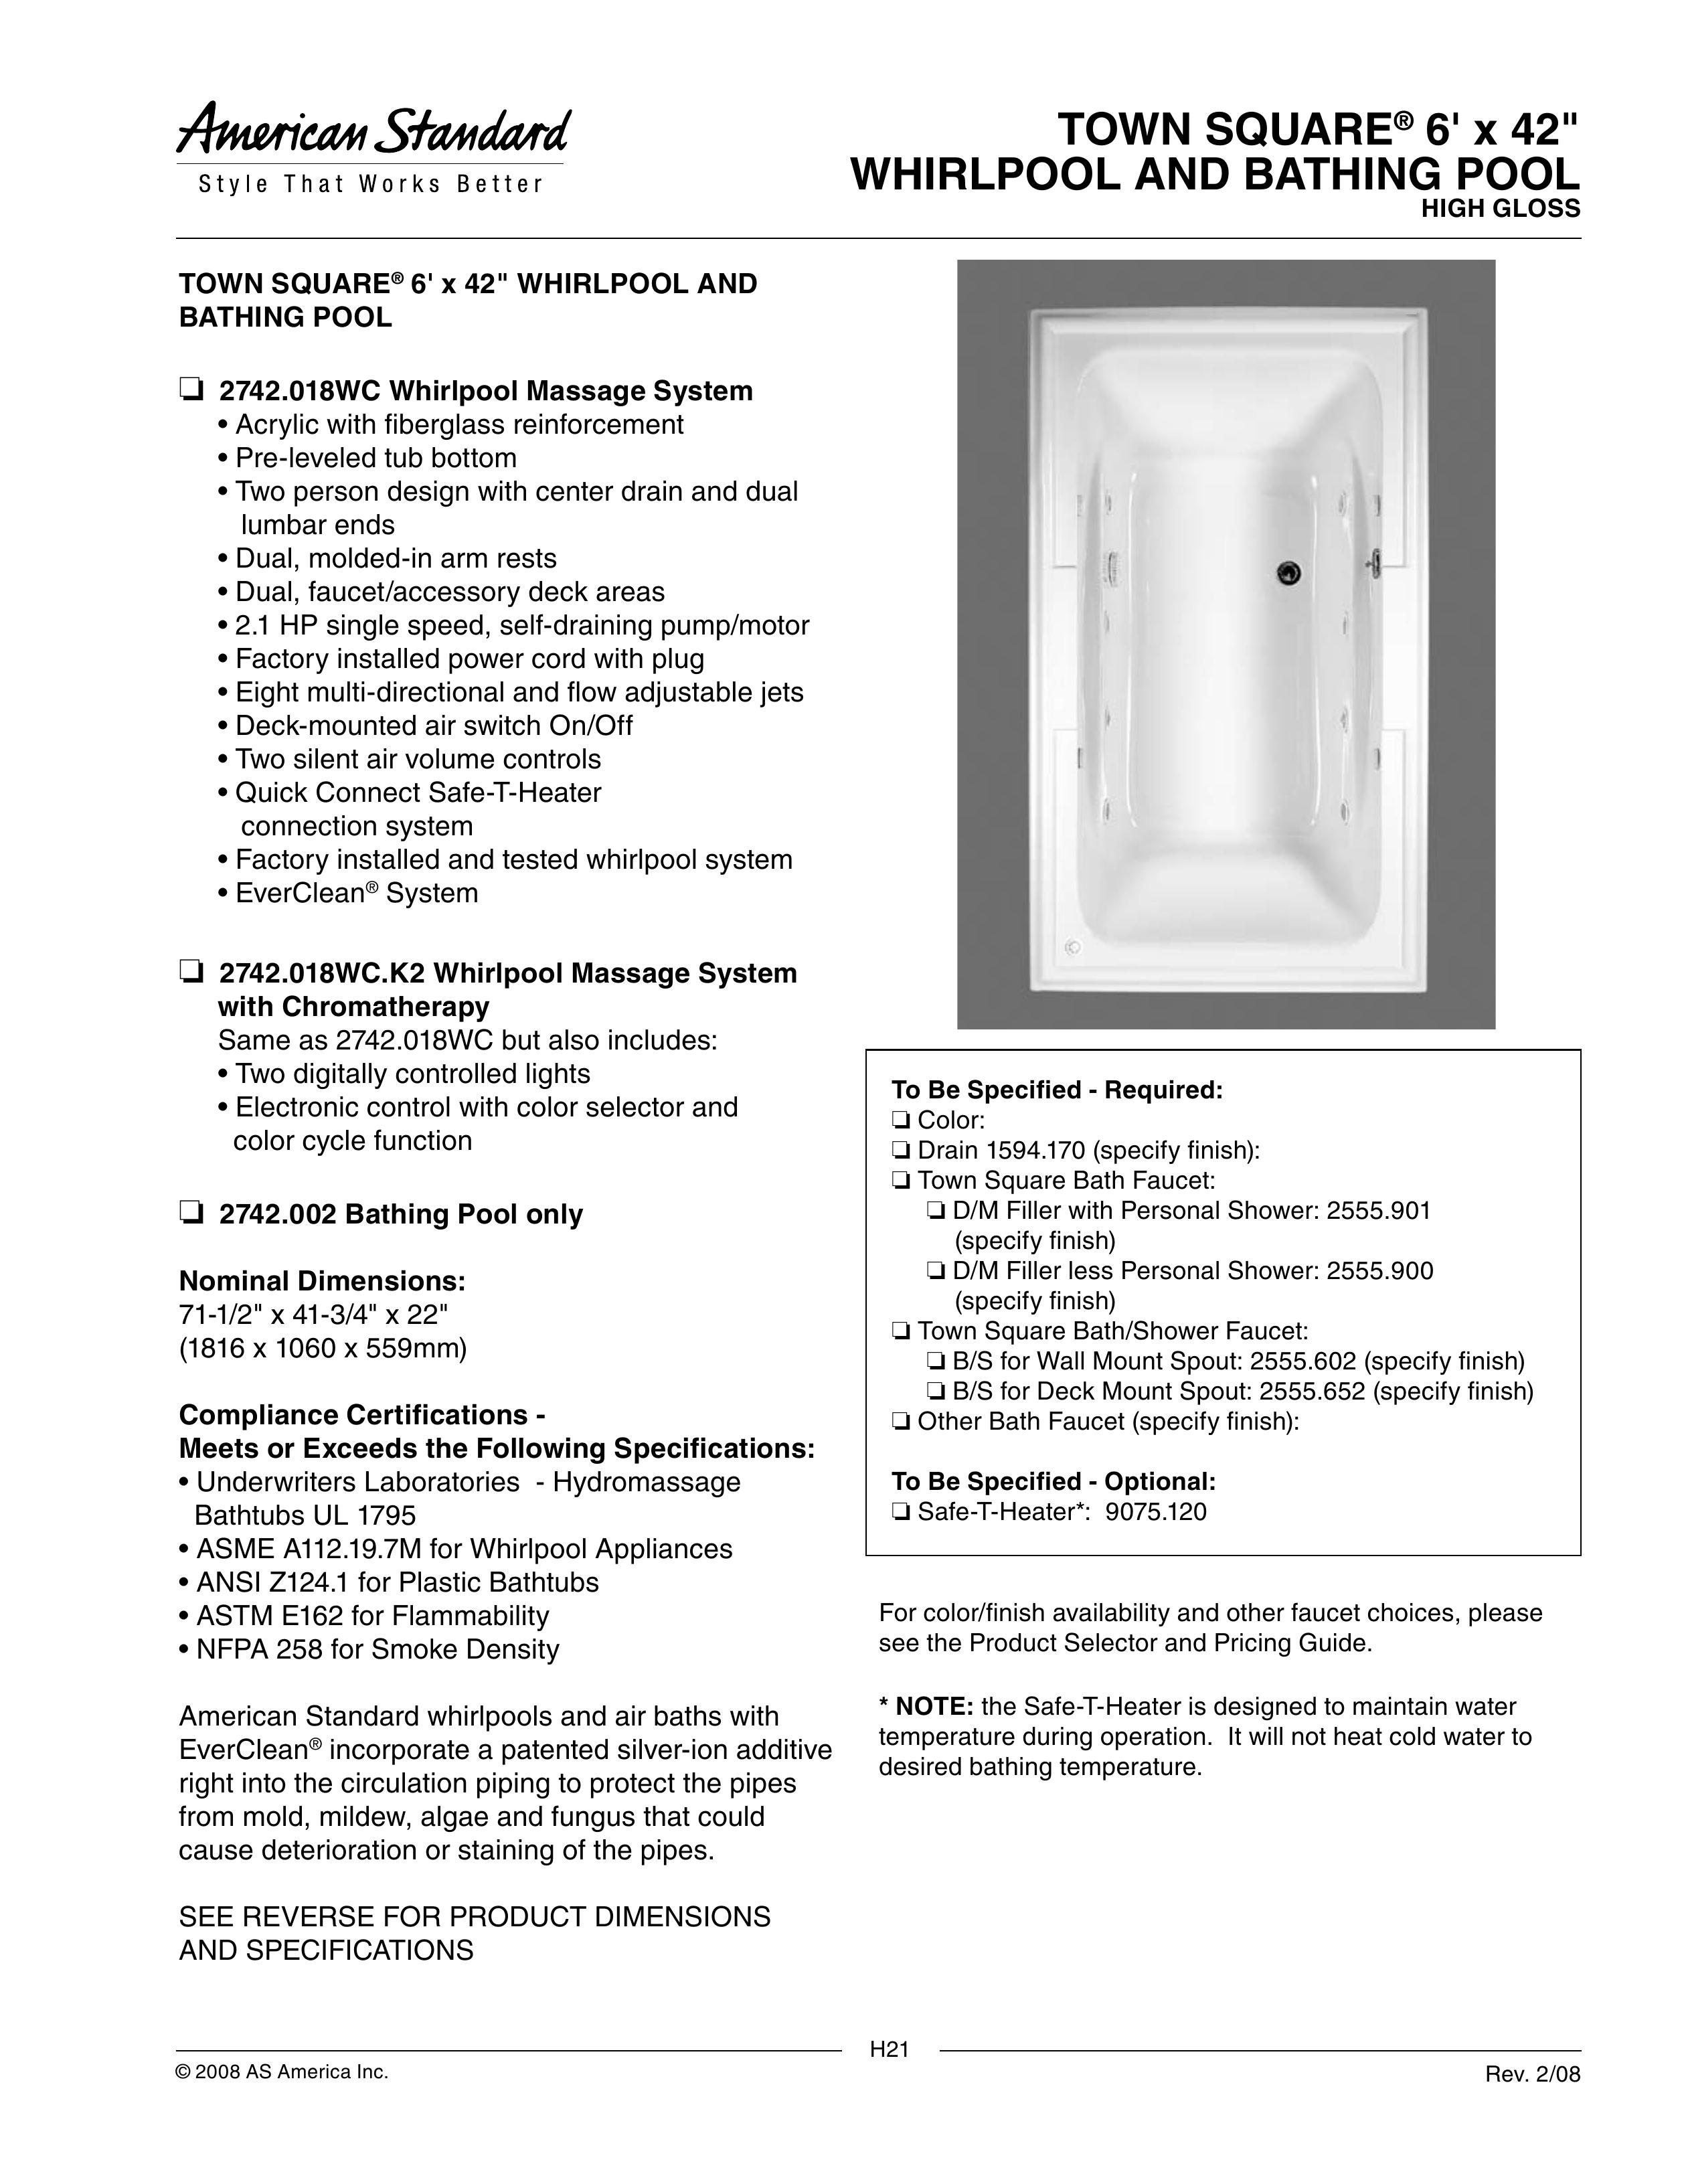 American Standard 2742.018WC Swimming Pool User Manual